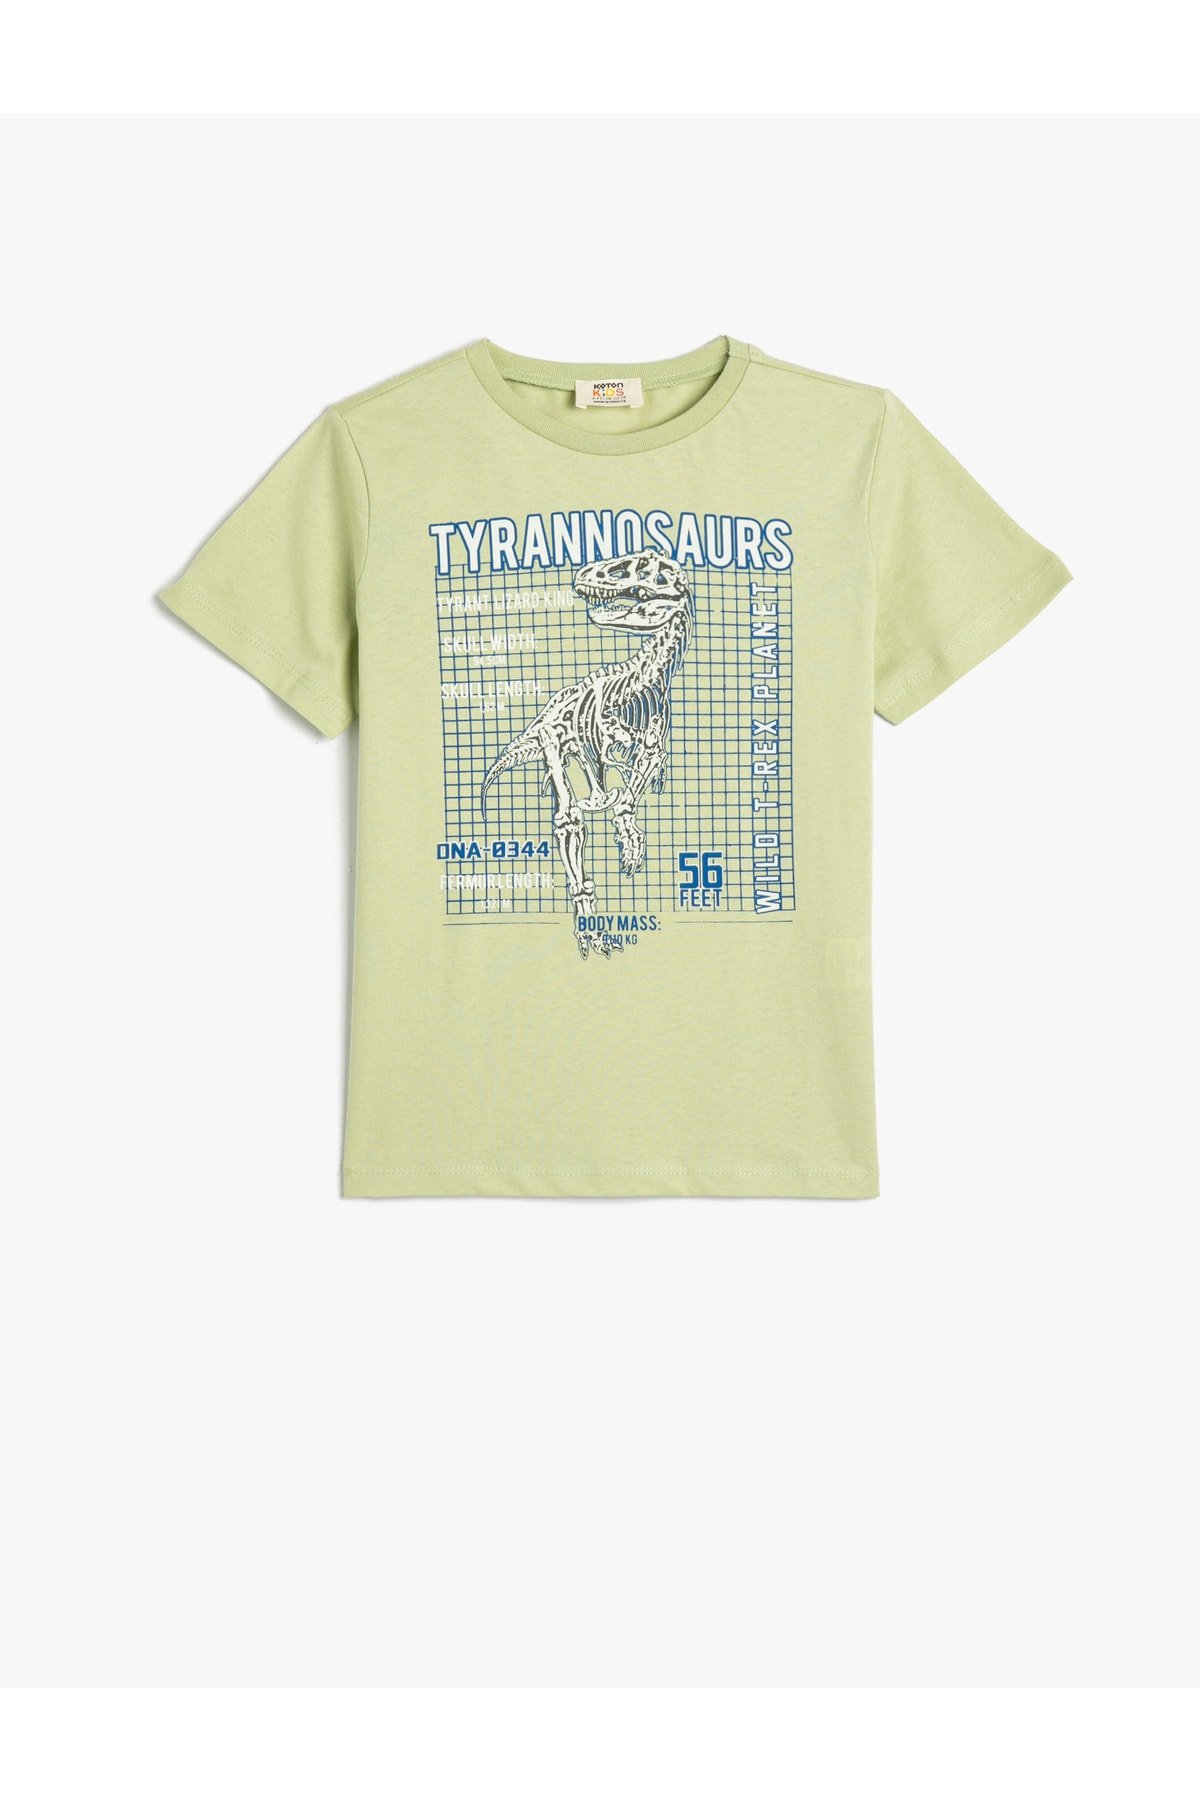 Koton T-Shirt Dinosaur Print Short Sleeved Crew Neck Cotton